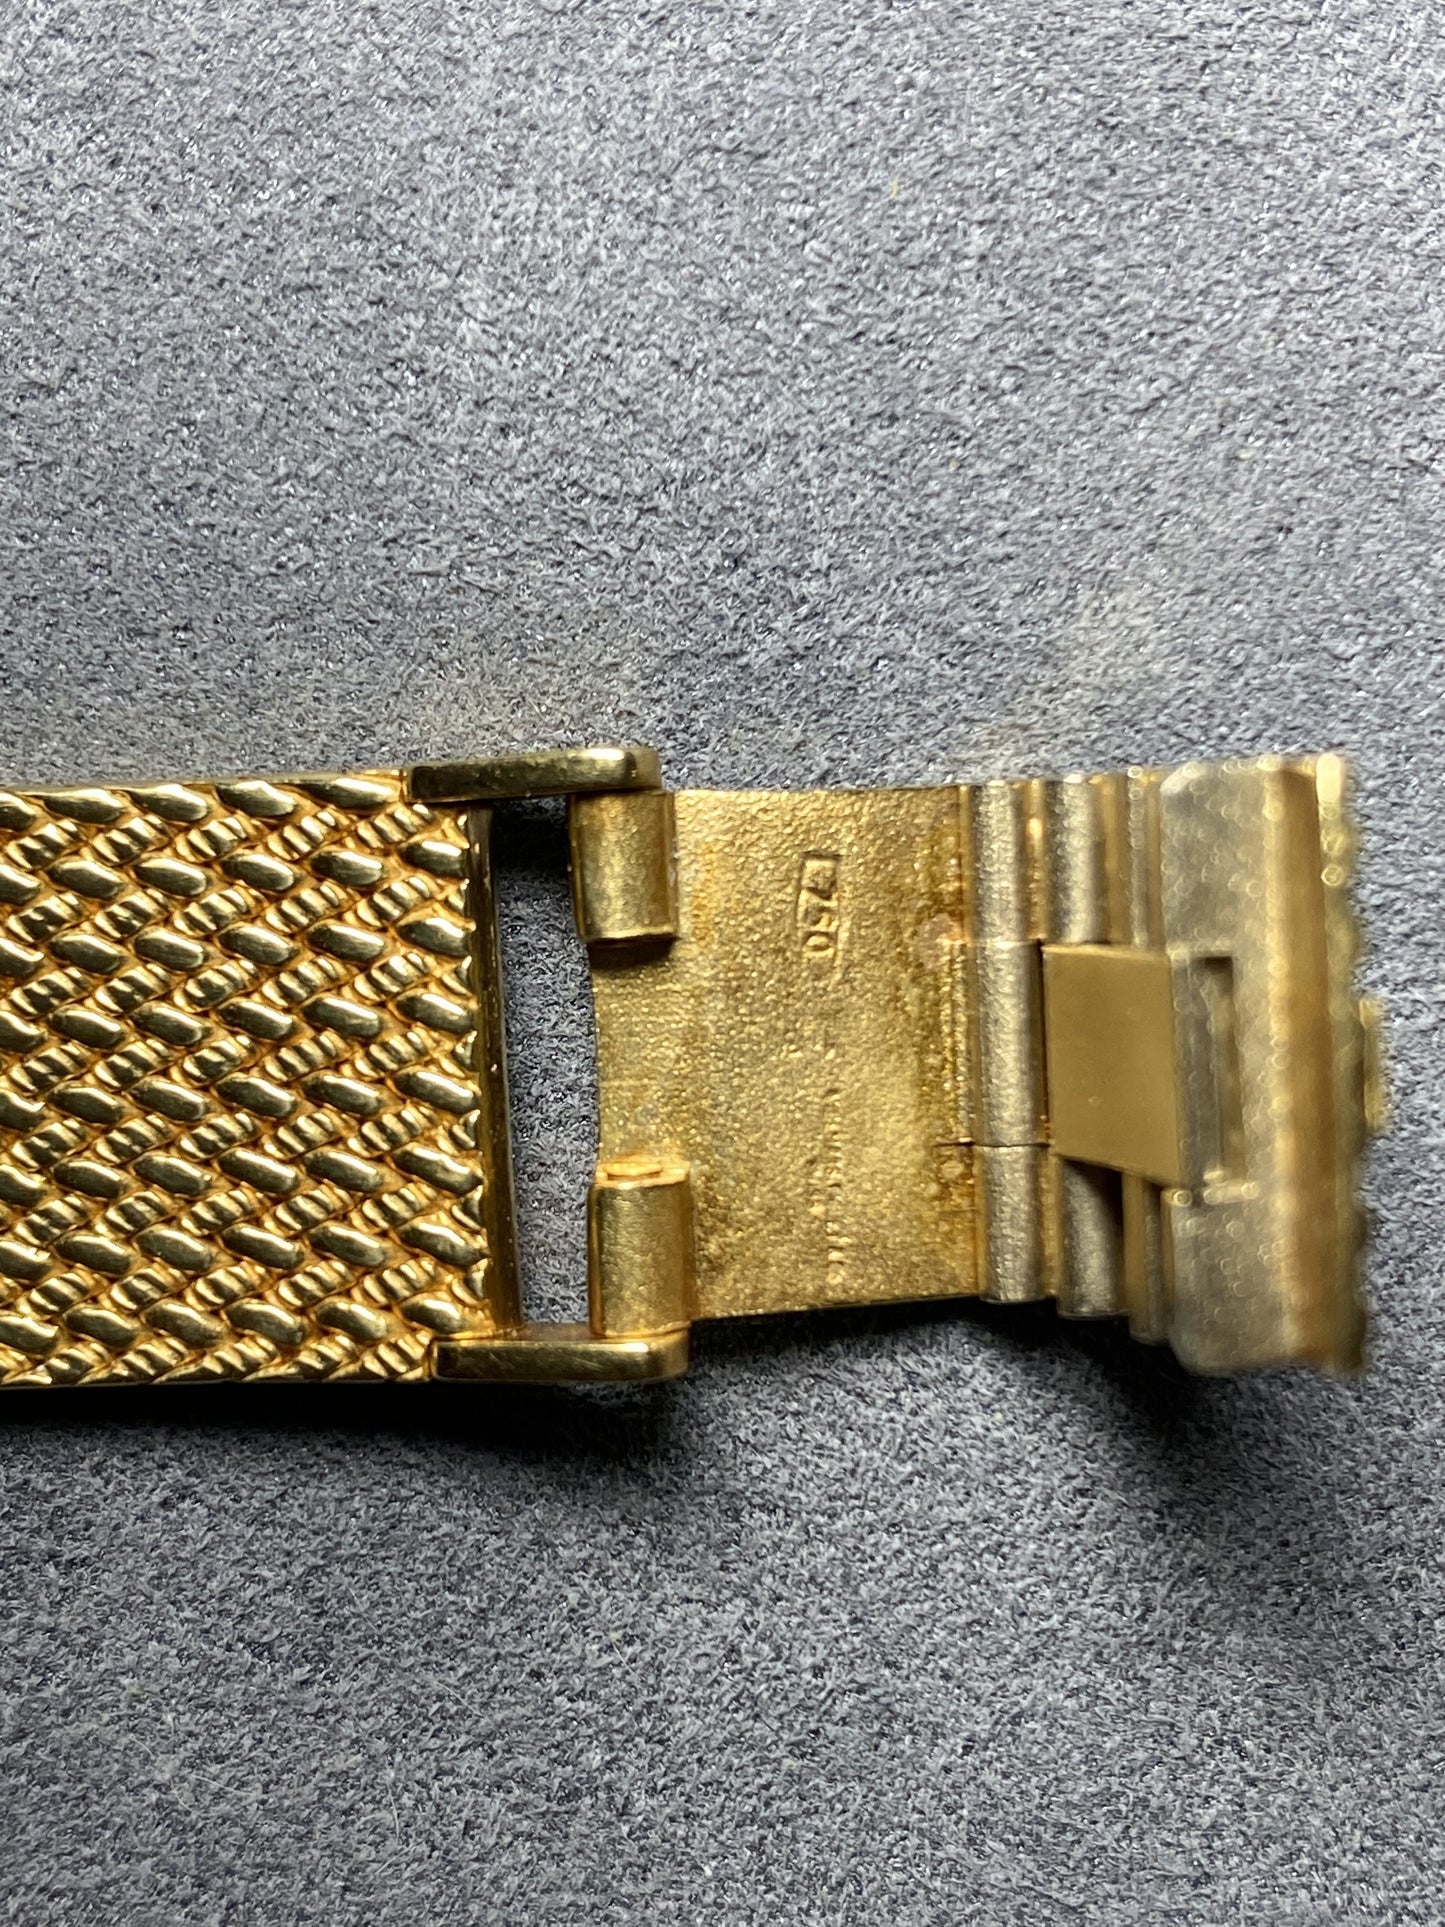 Audemars Piguet Cobra Vintage Watch Yellow Gold Manual Winding - PM Vintage Watches - Audemars Piguet